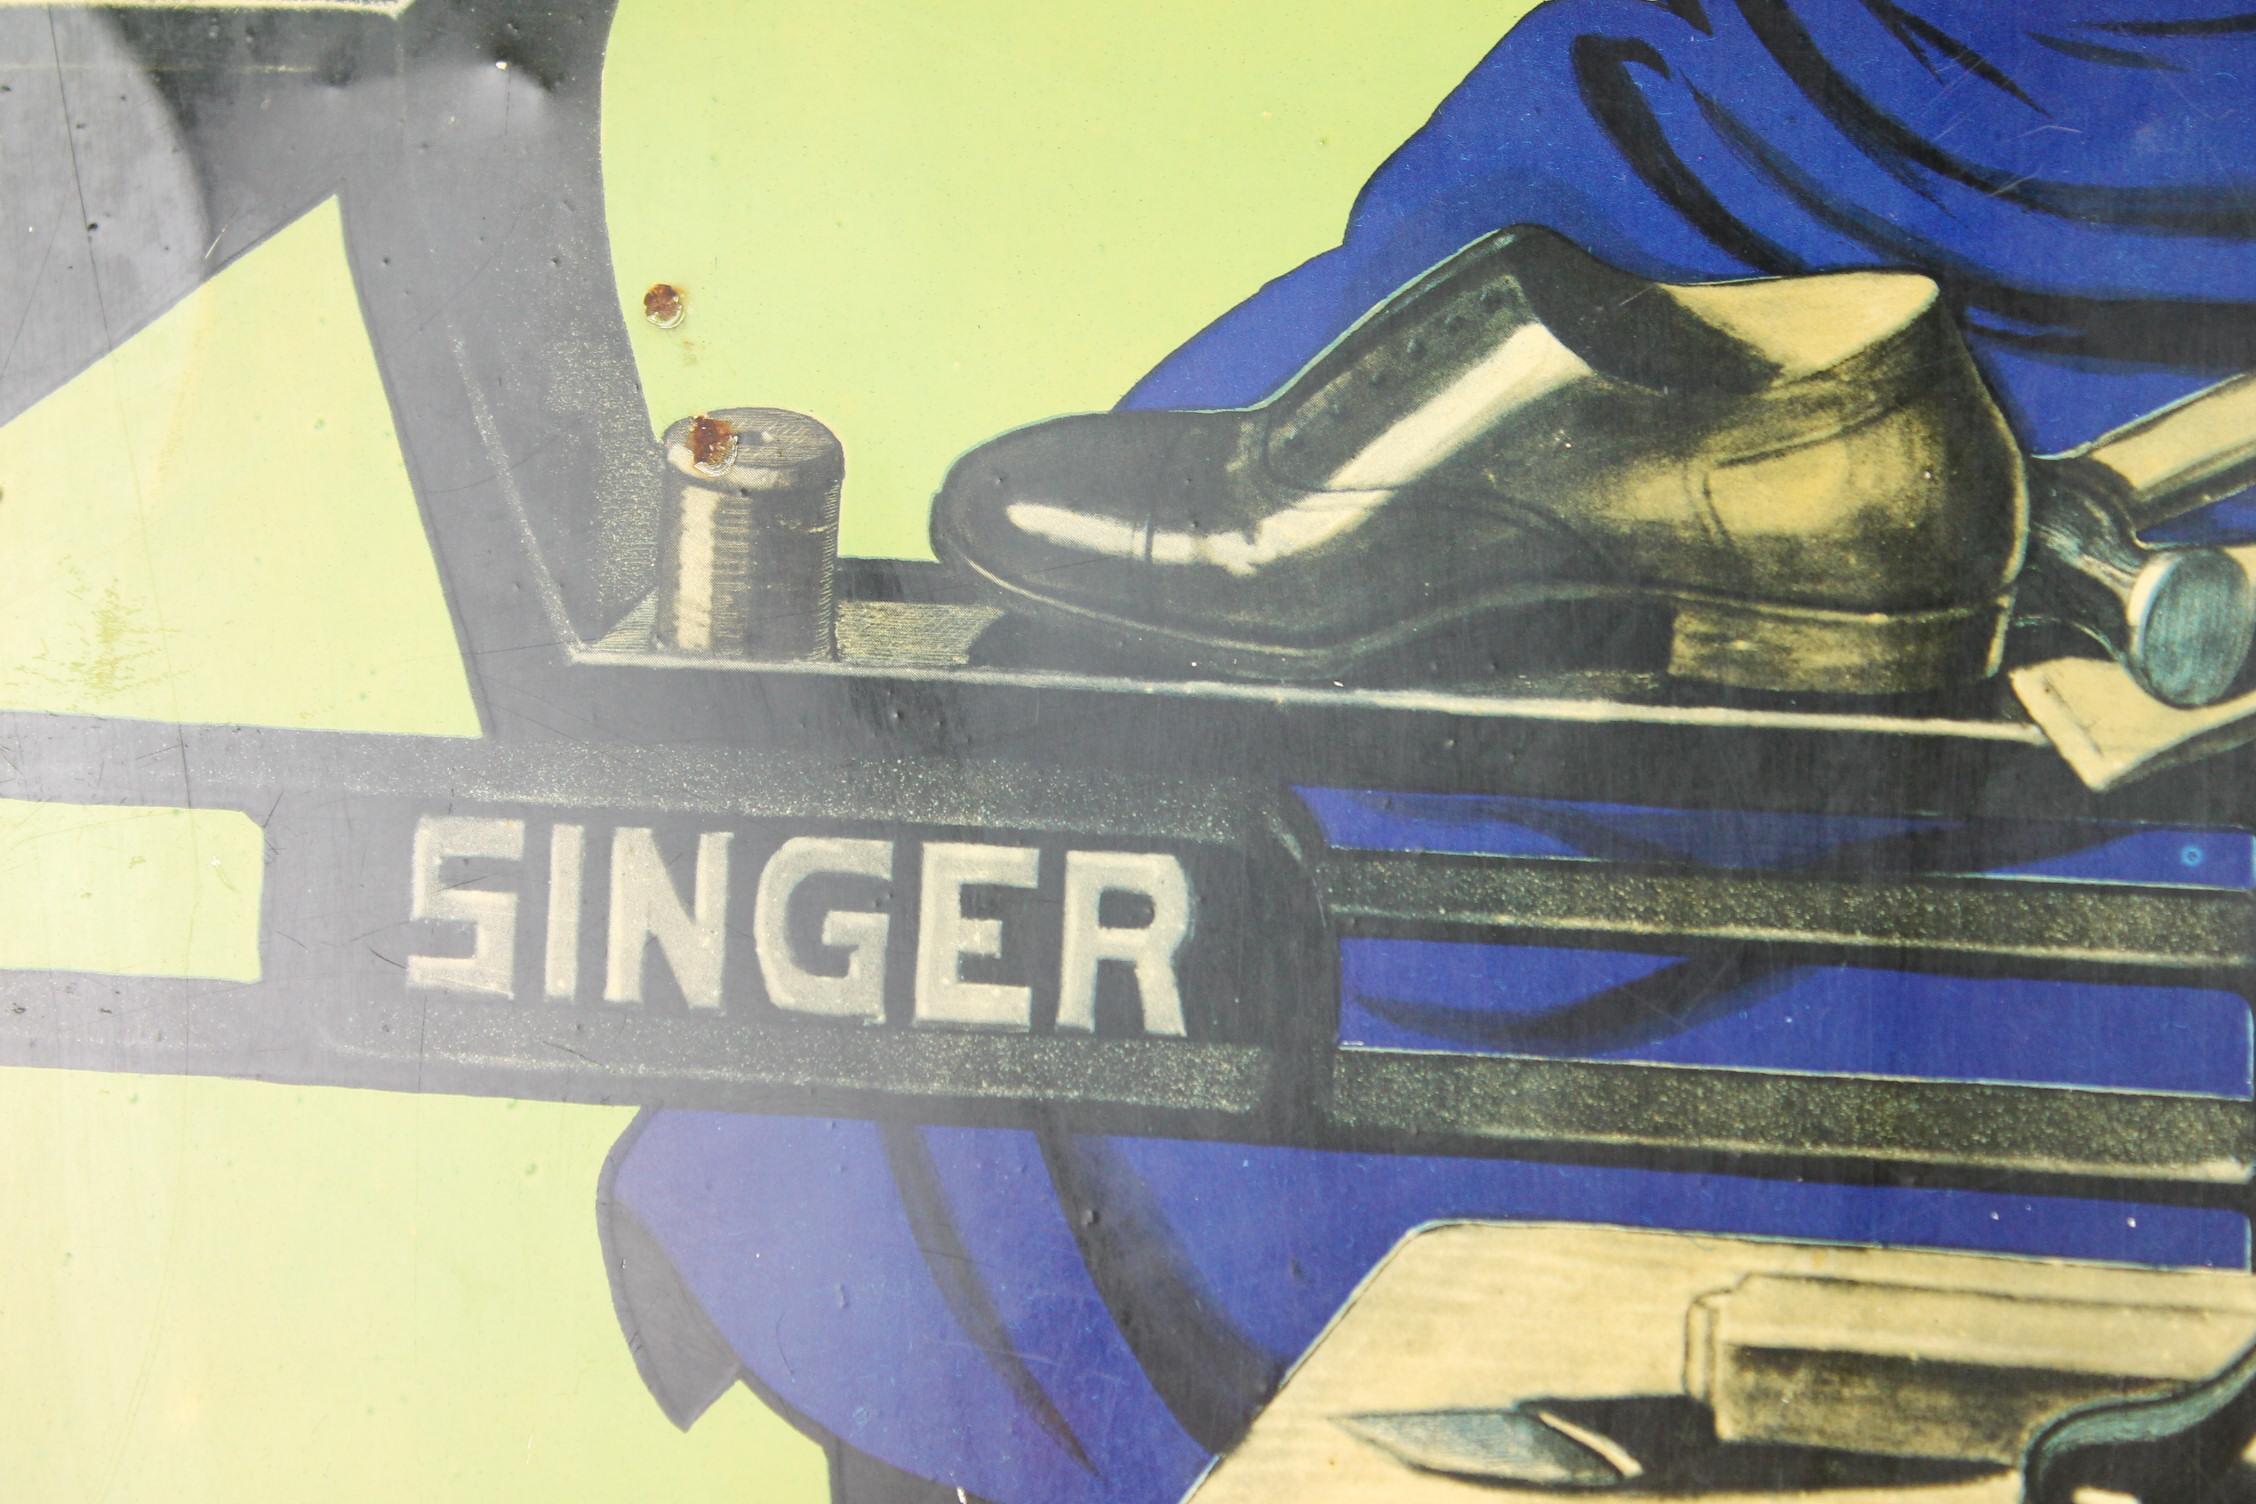 Shoemaker's Singer Machines Vintage Advertising Sign (Belgisch)